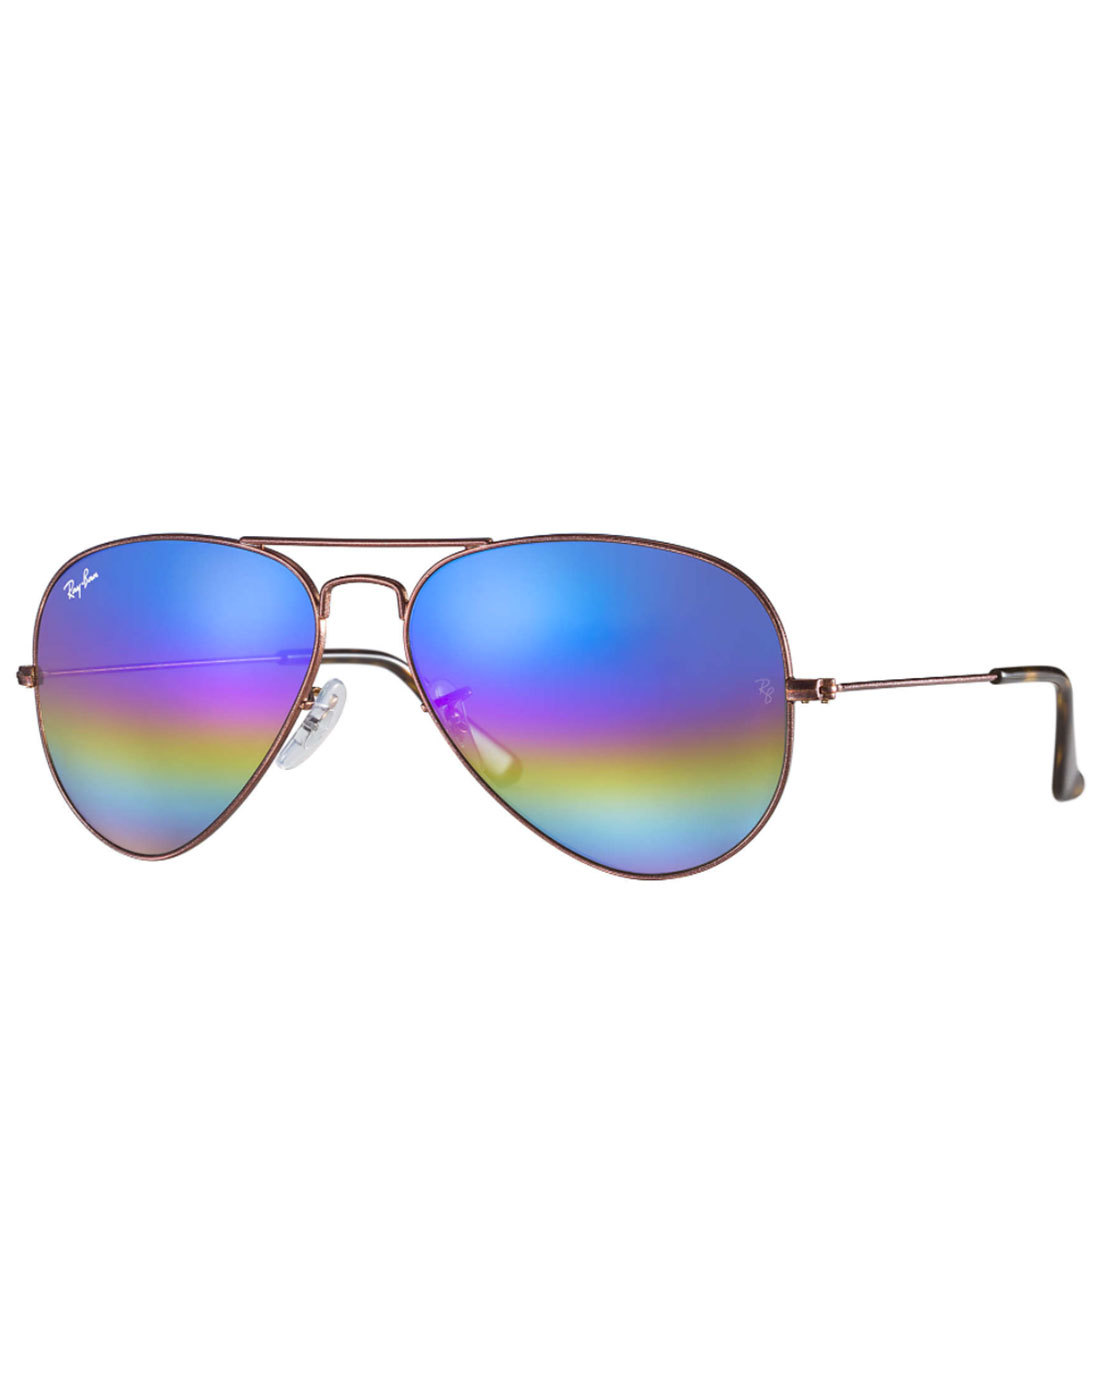 RAY-BAN Rainbow Aviator Retro 70s Sunglasses - Blue Flash Lens